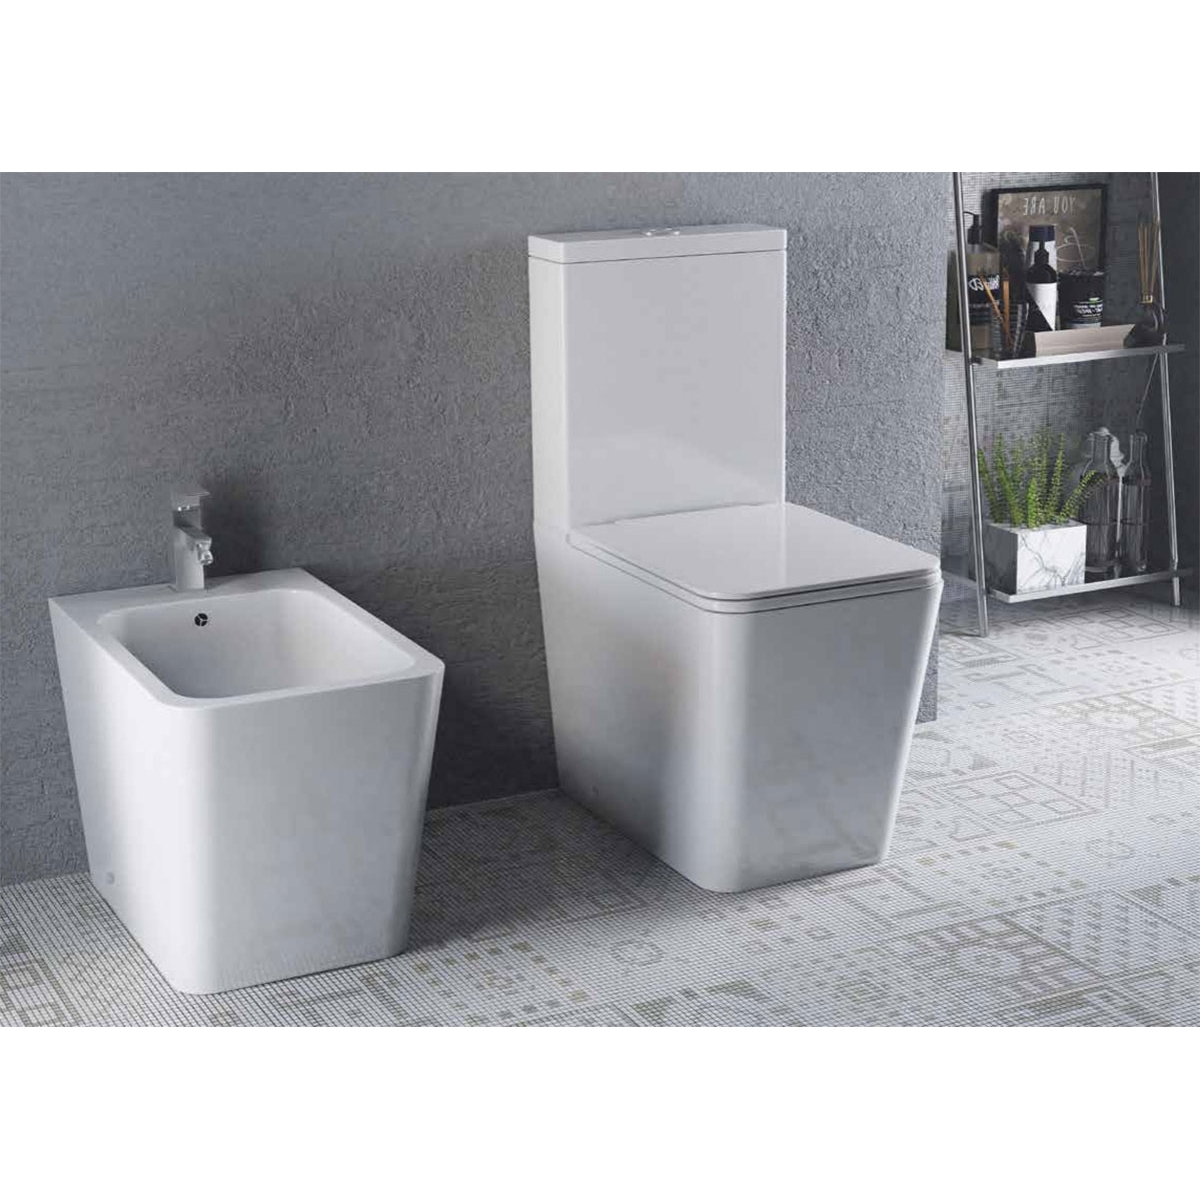 Toilet-BTW-Pisa-Compacto-completo2